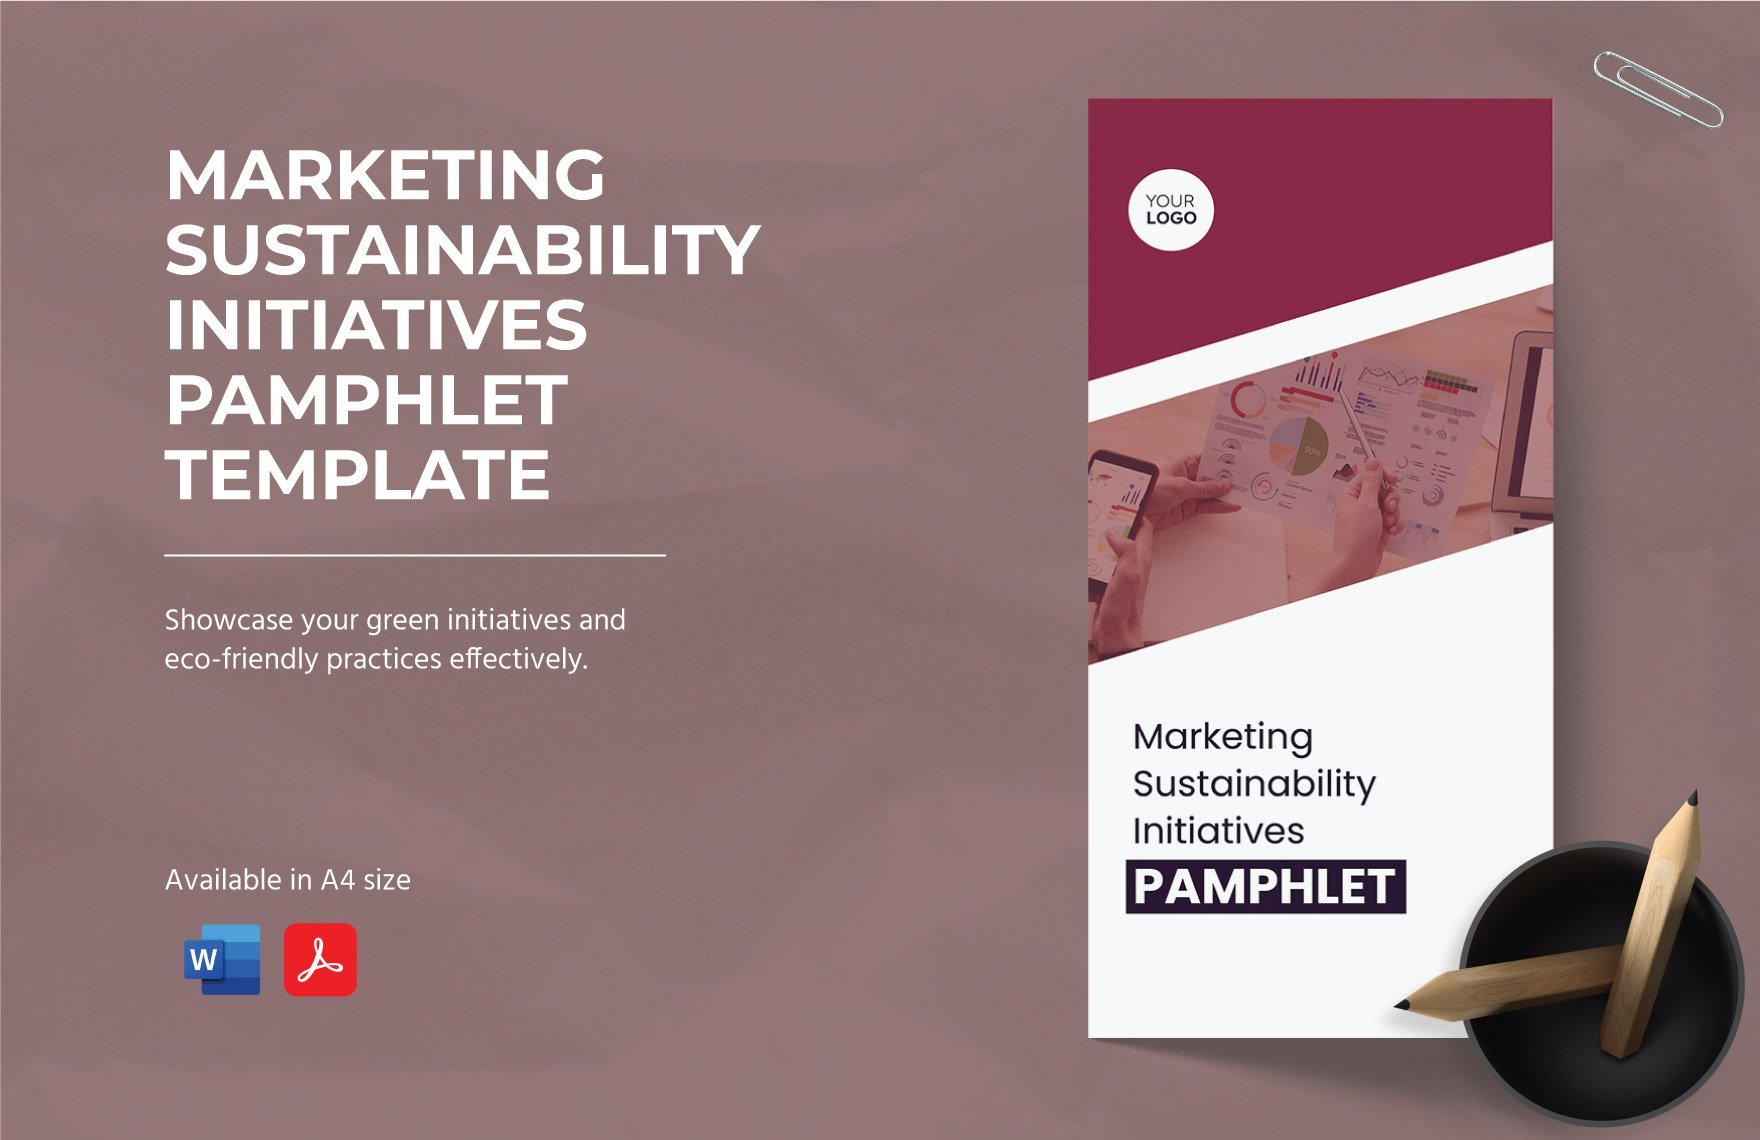 Marketing Sustainability Initiatives Pamphlet Template